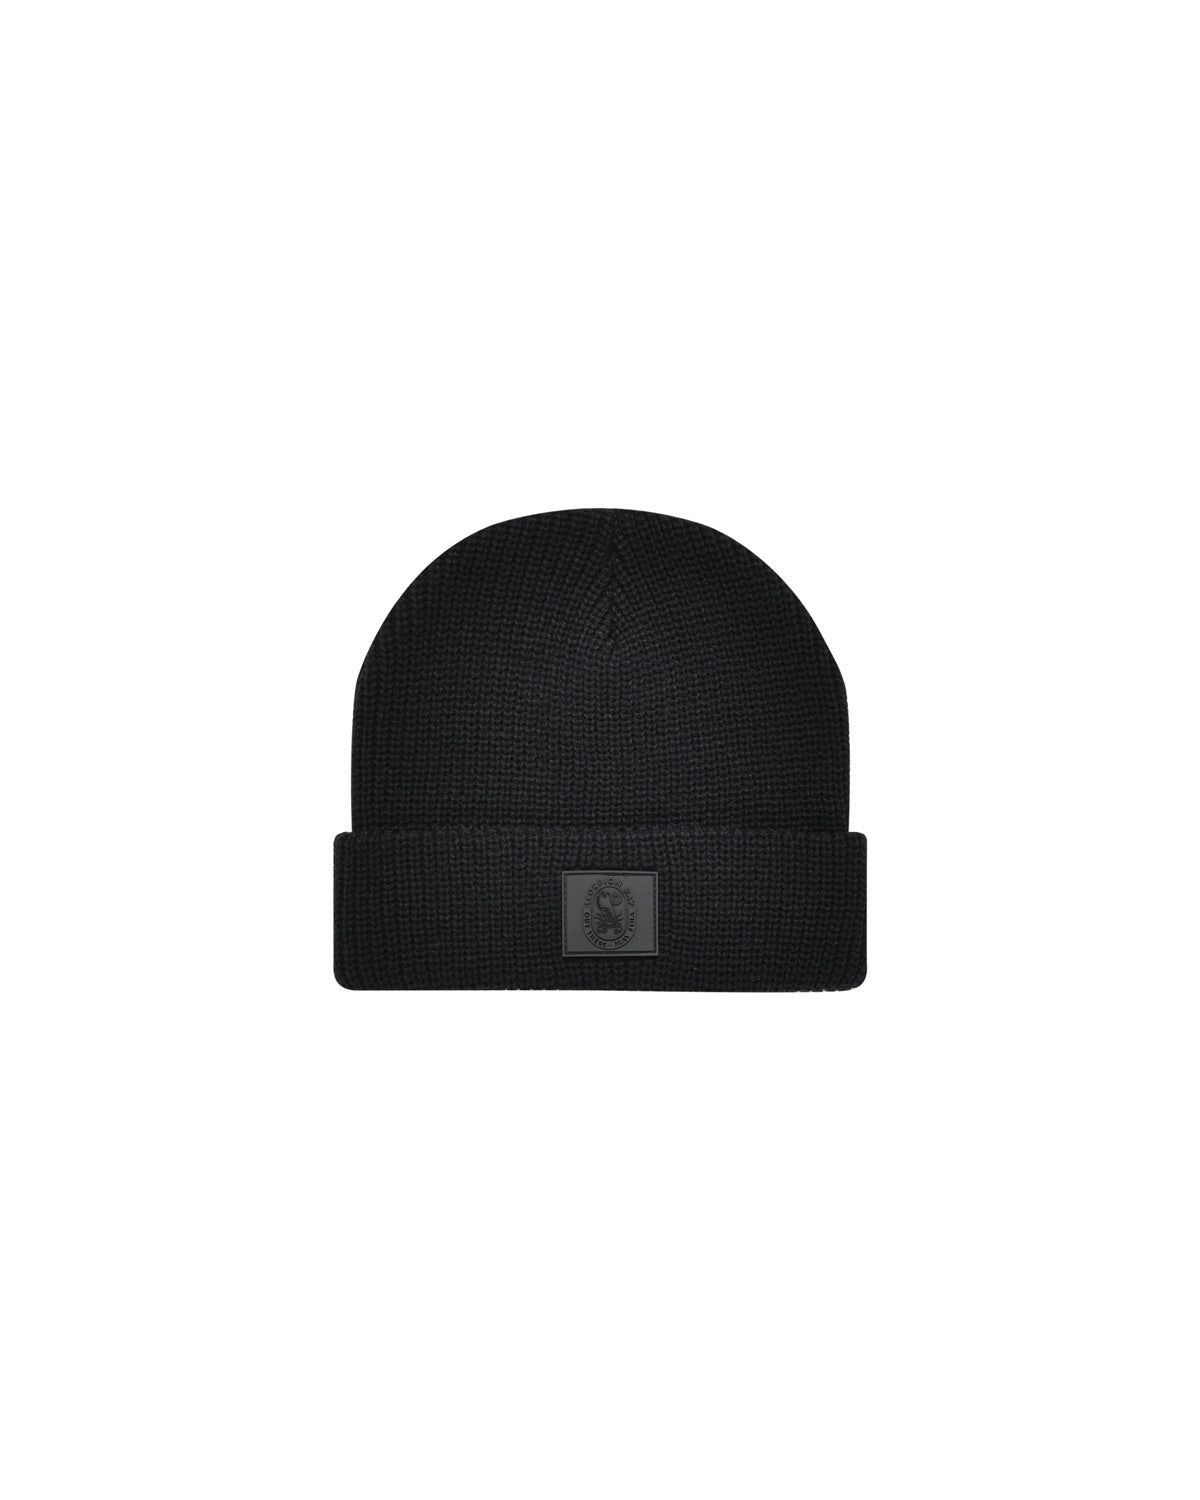 Short black cap with logo patch